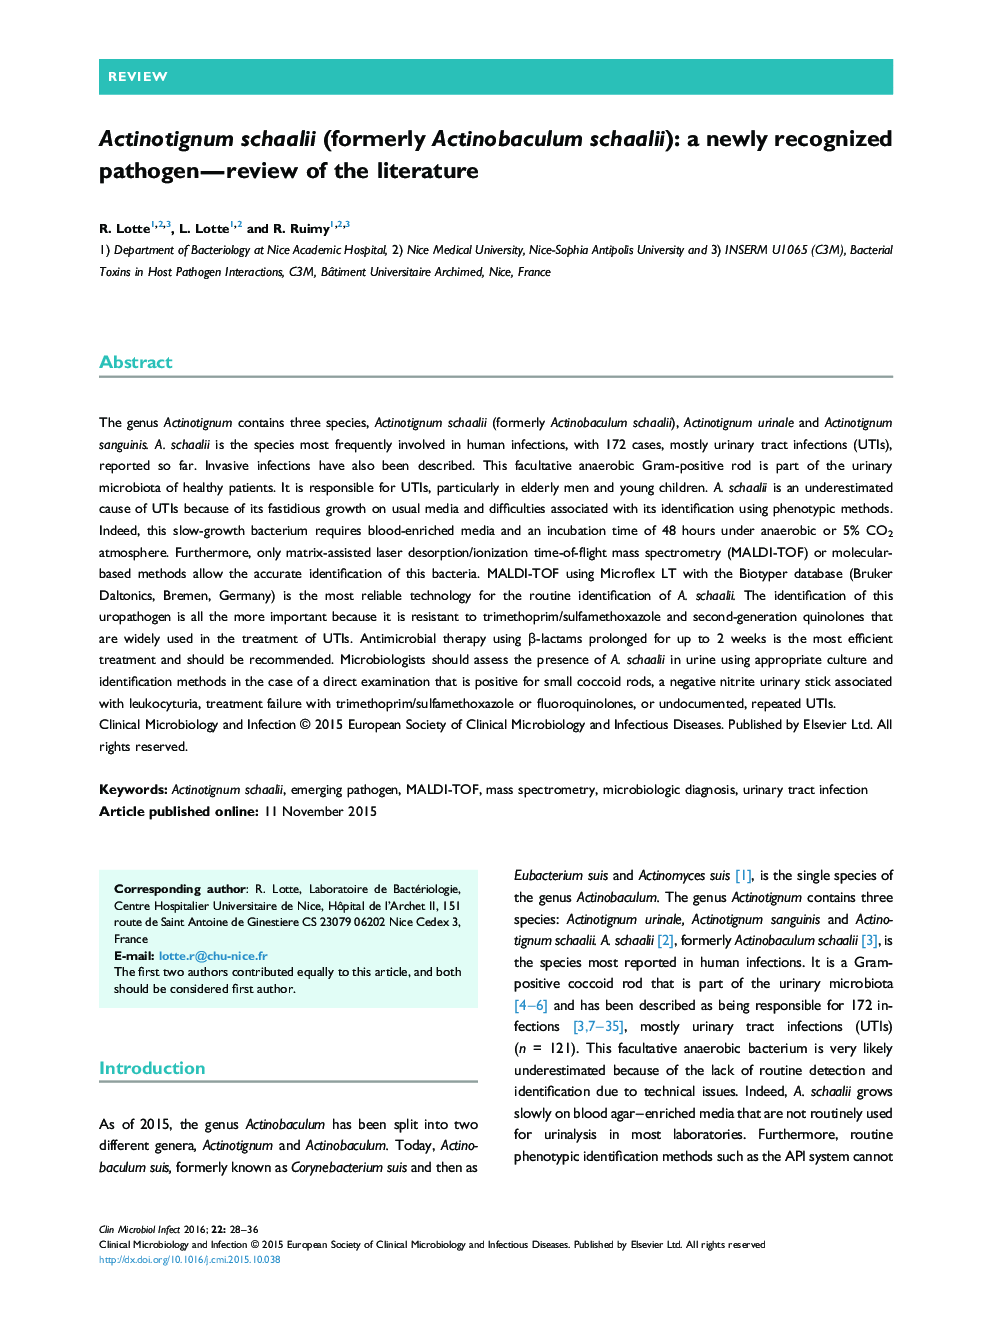 Actinotignum schaalii (formerly Actinobaculum schaalii): a newly recognized pathogen-review of the literature